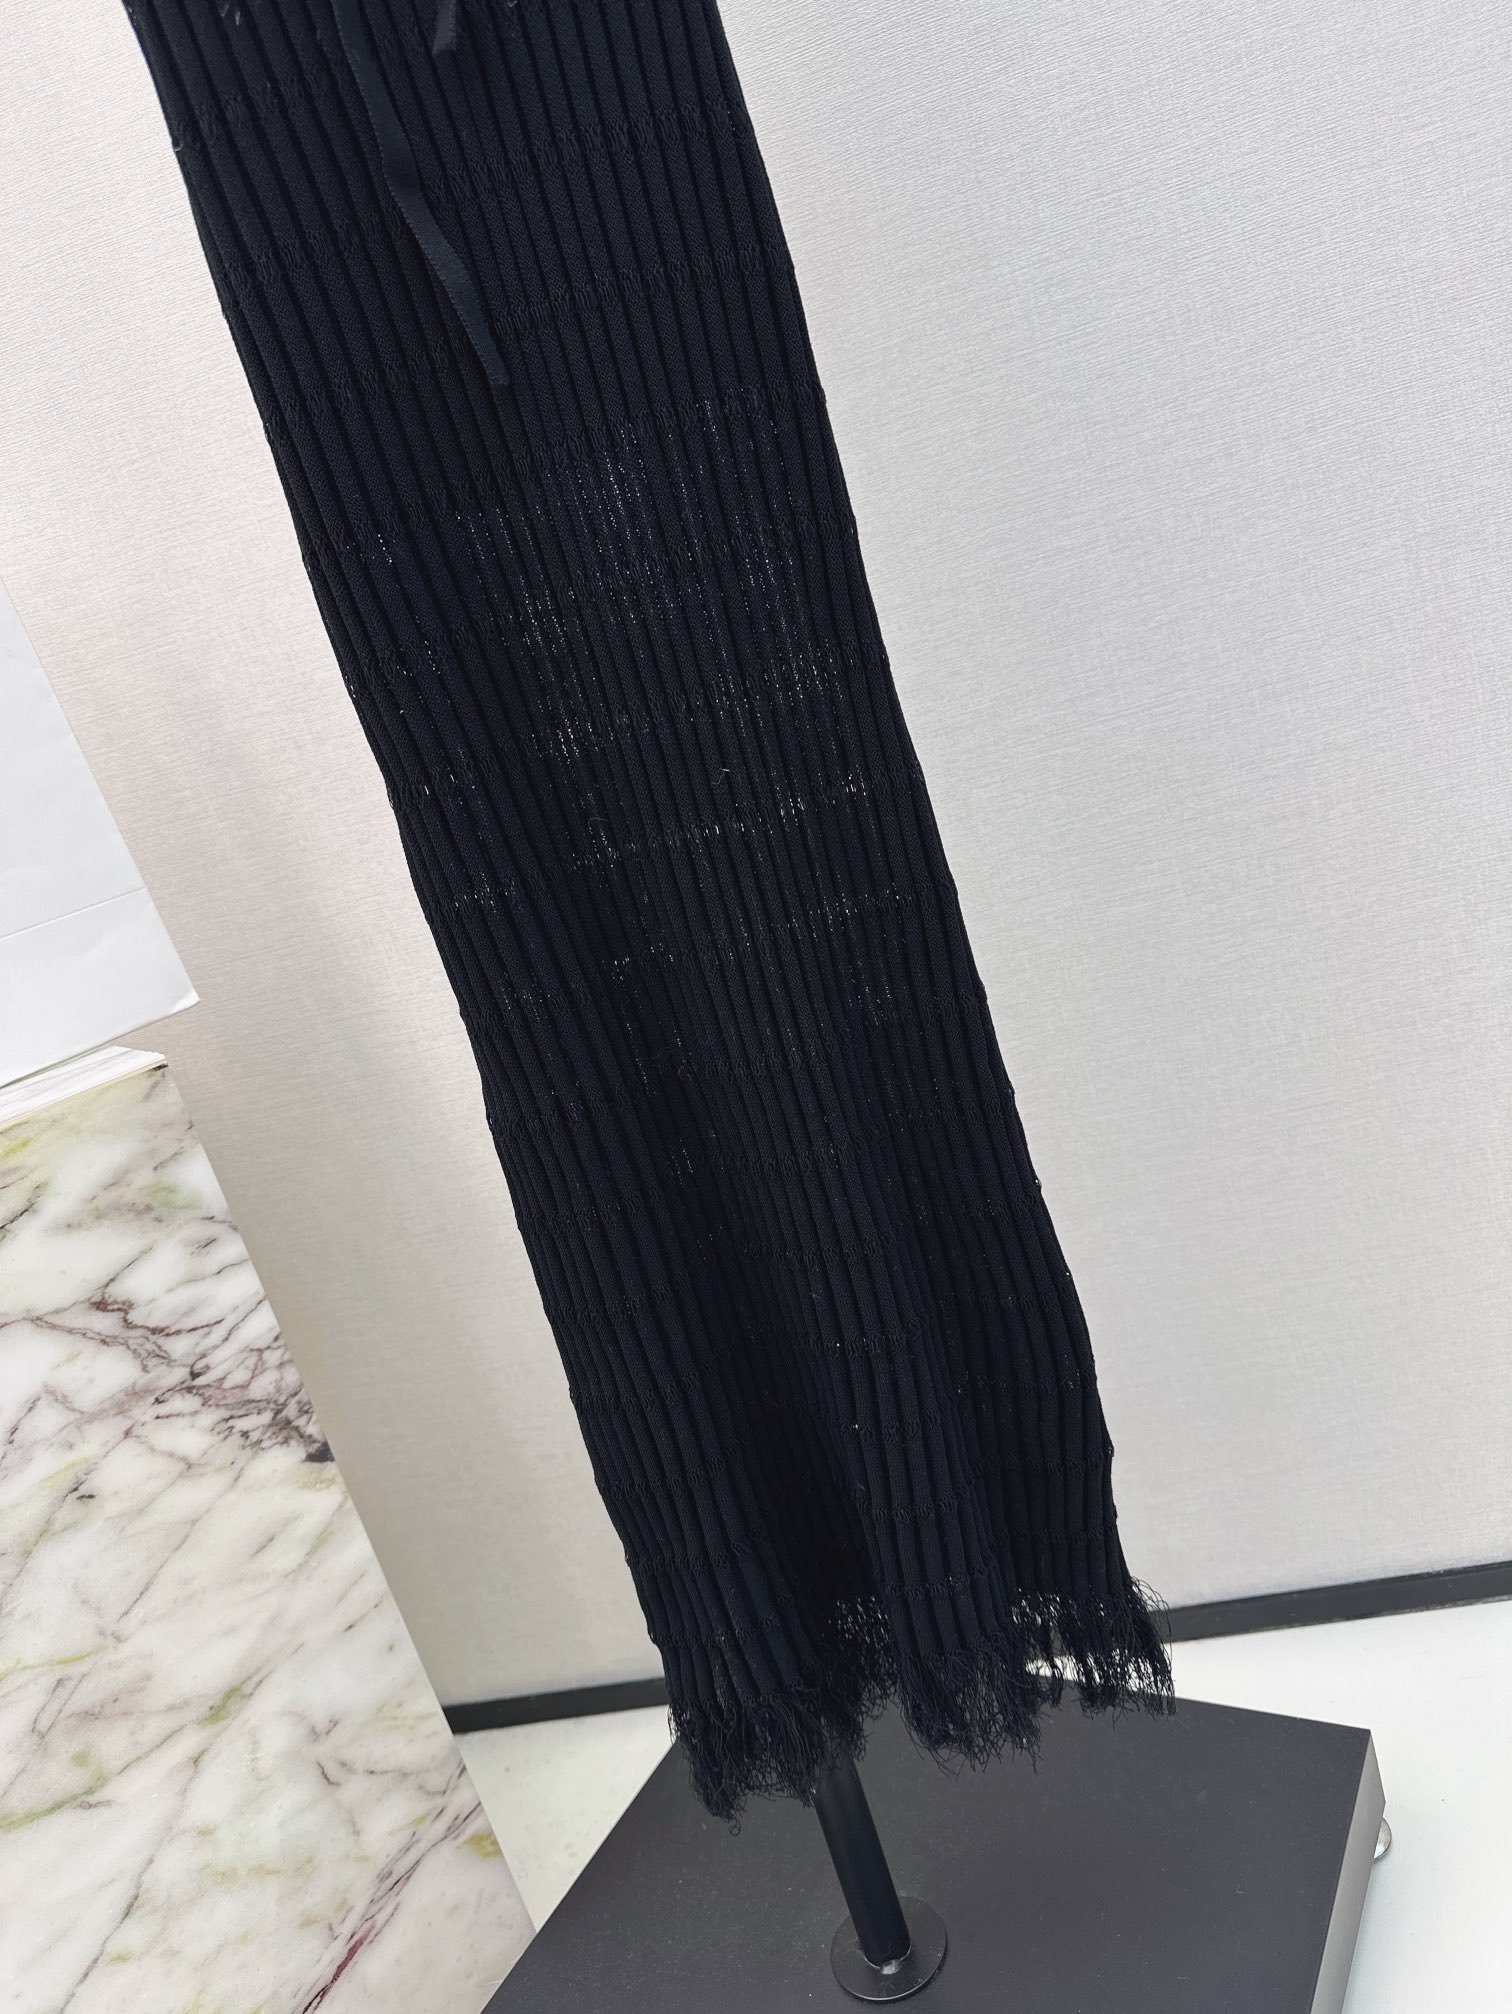 Bal24Ss春夏最新款针织吊带长裙满满的精致高级感简约又时髦V领设计尽显纯欲小心机超级修饰颈部线条上身